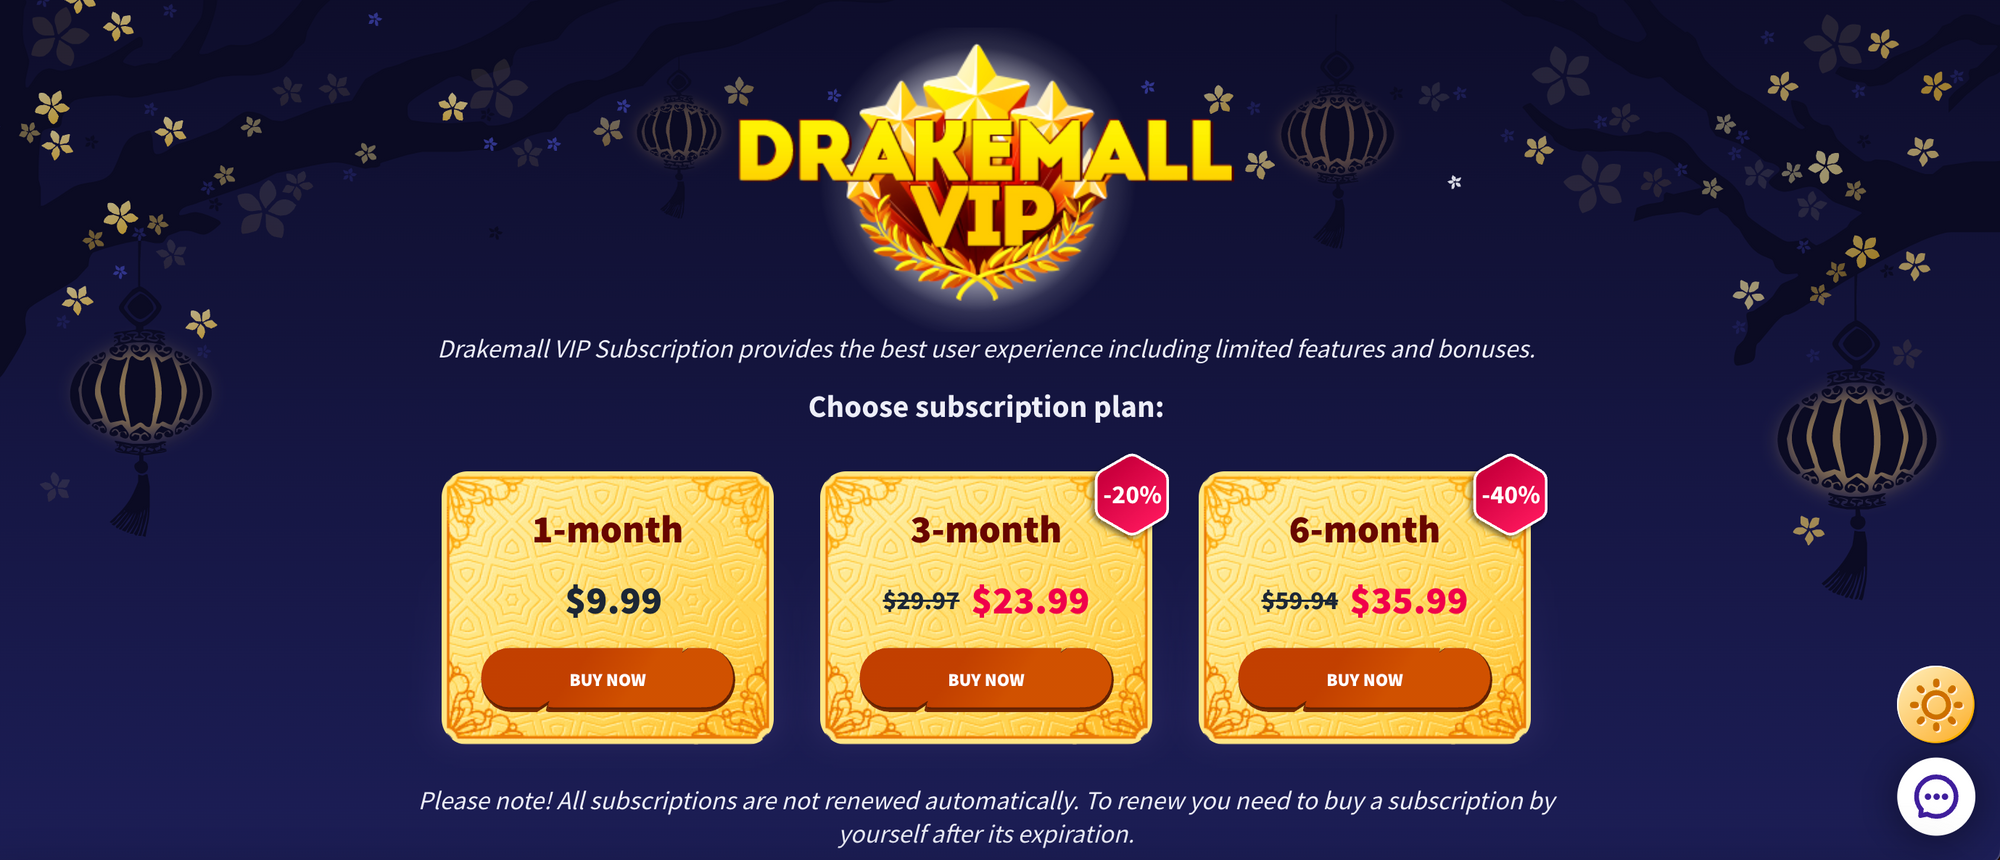 Drakemall's VIP Plan Reviewed